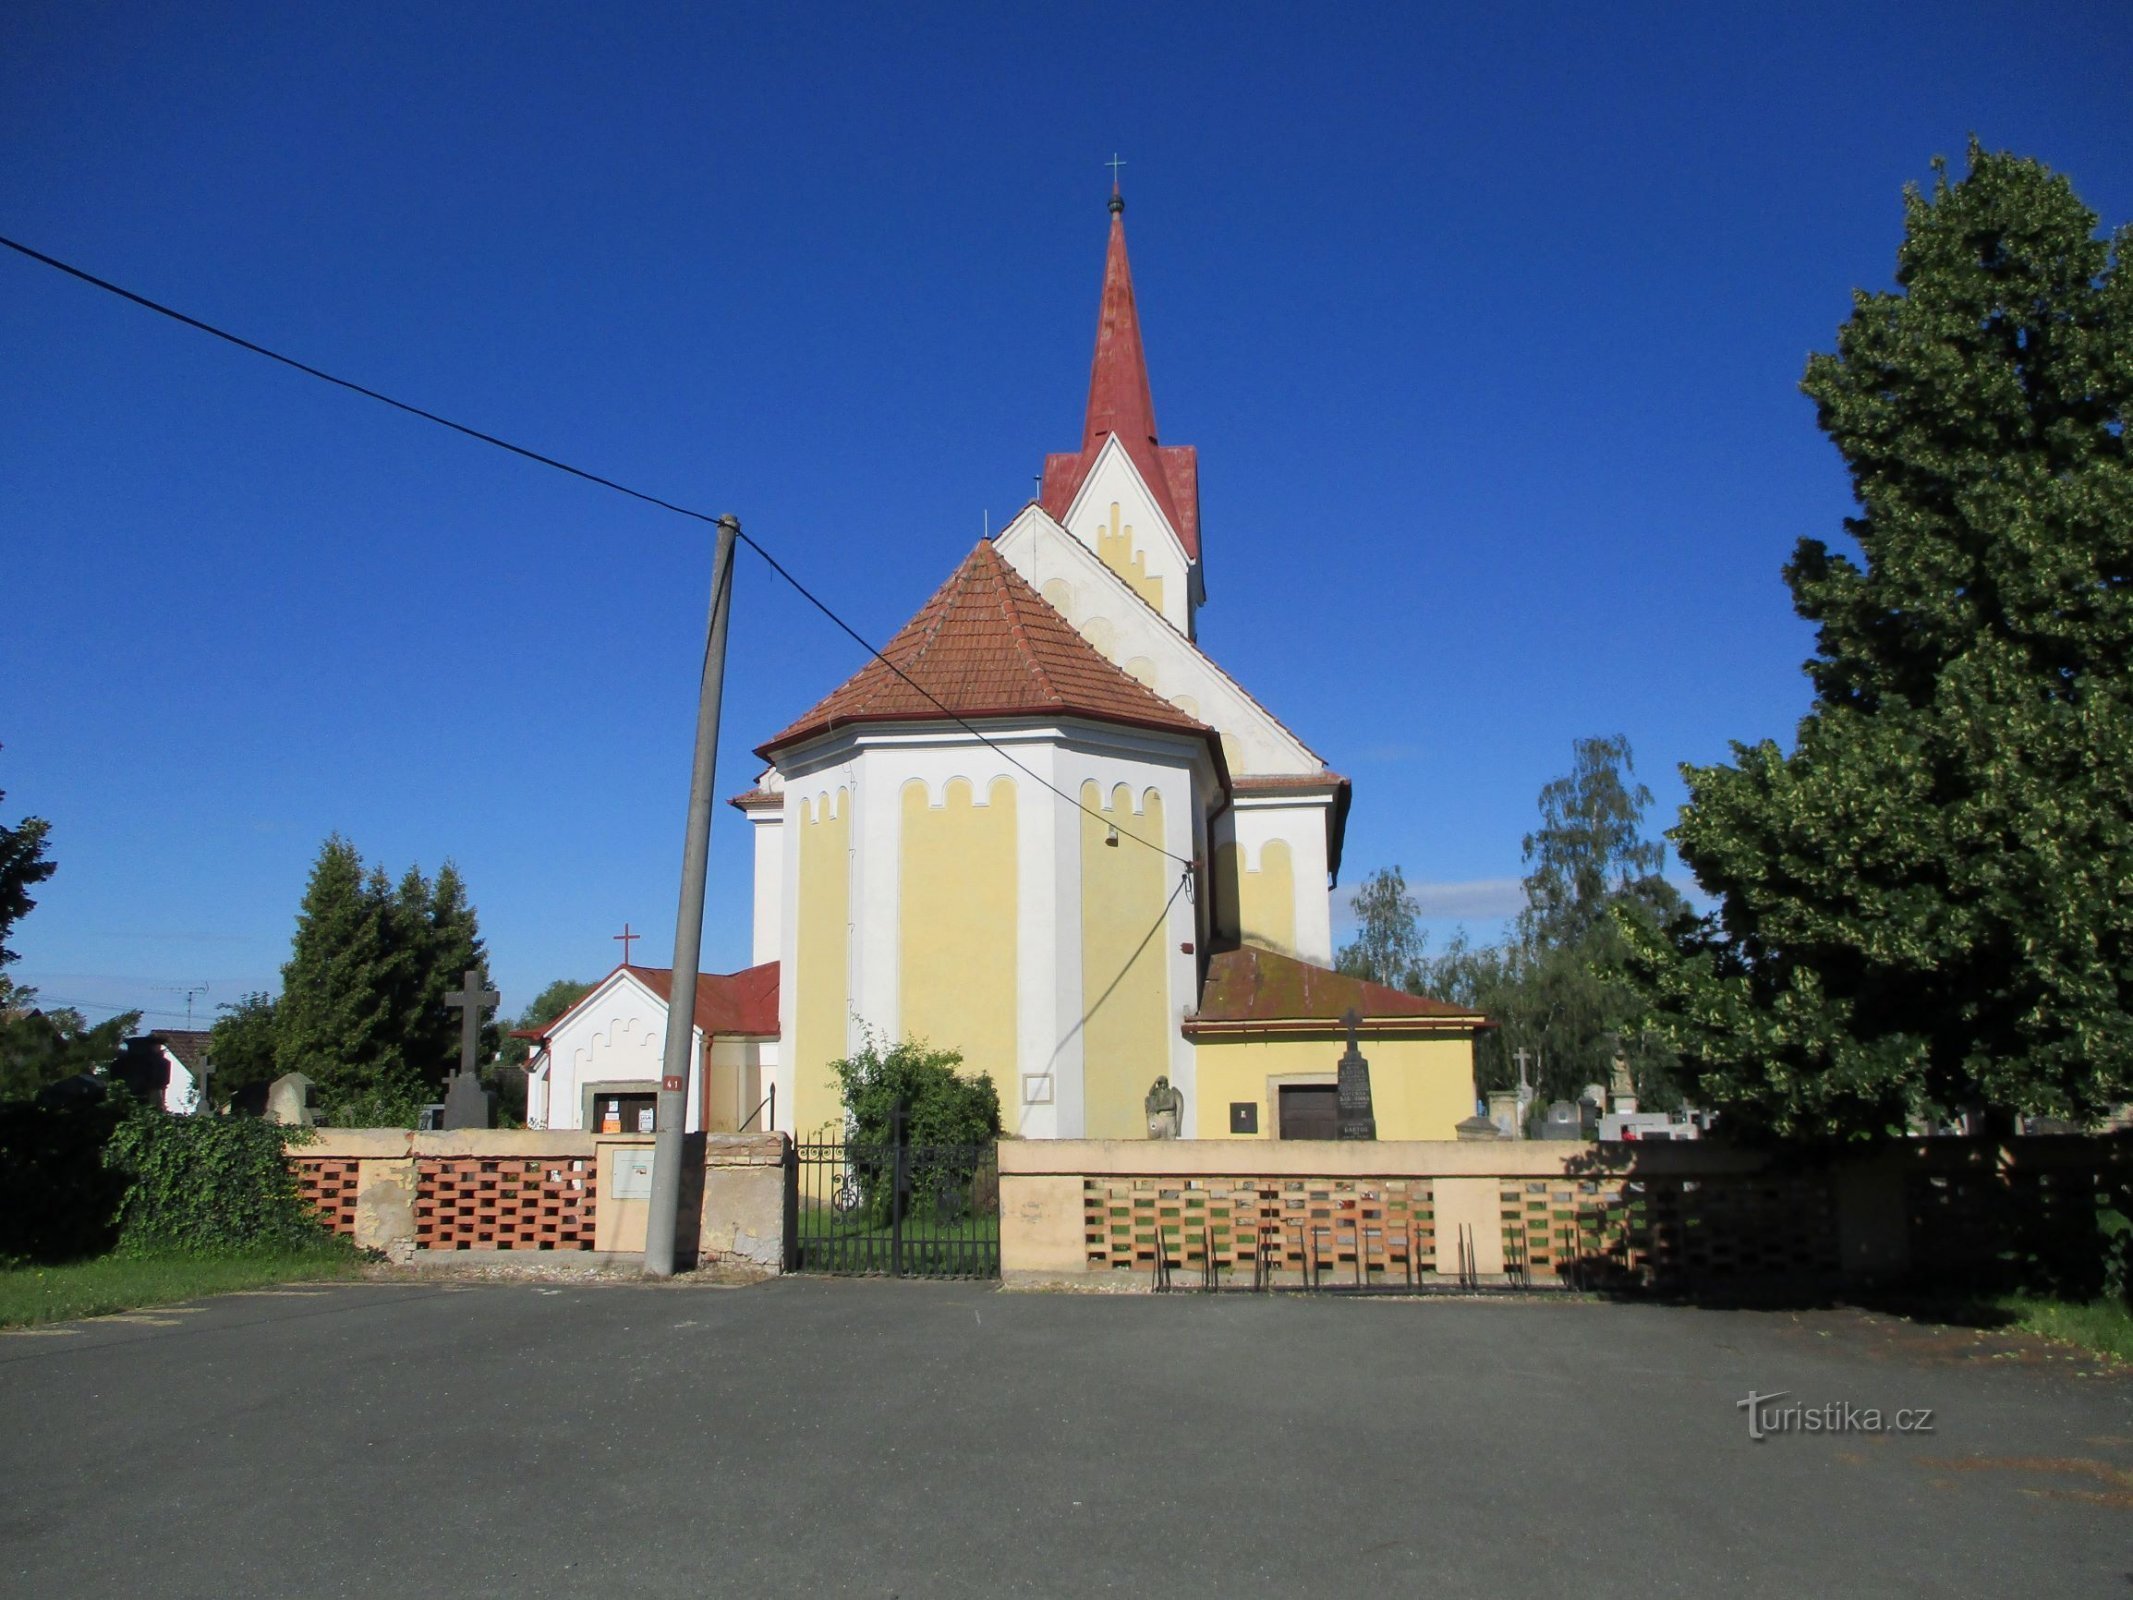 Iglesia de San Filip y Jakub (Mlékosrby, 5.7.2020/XNUMX/XNUMX)